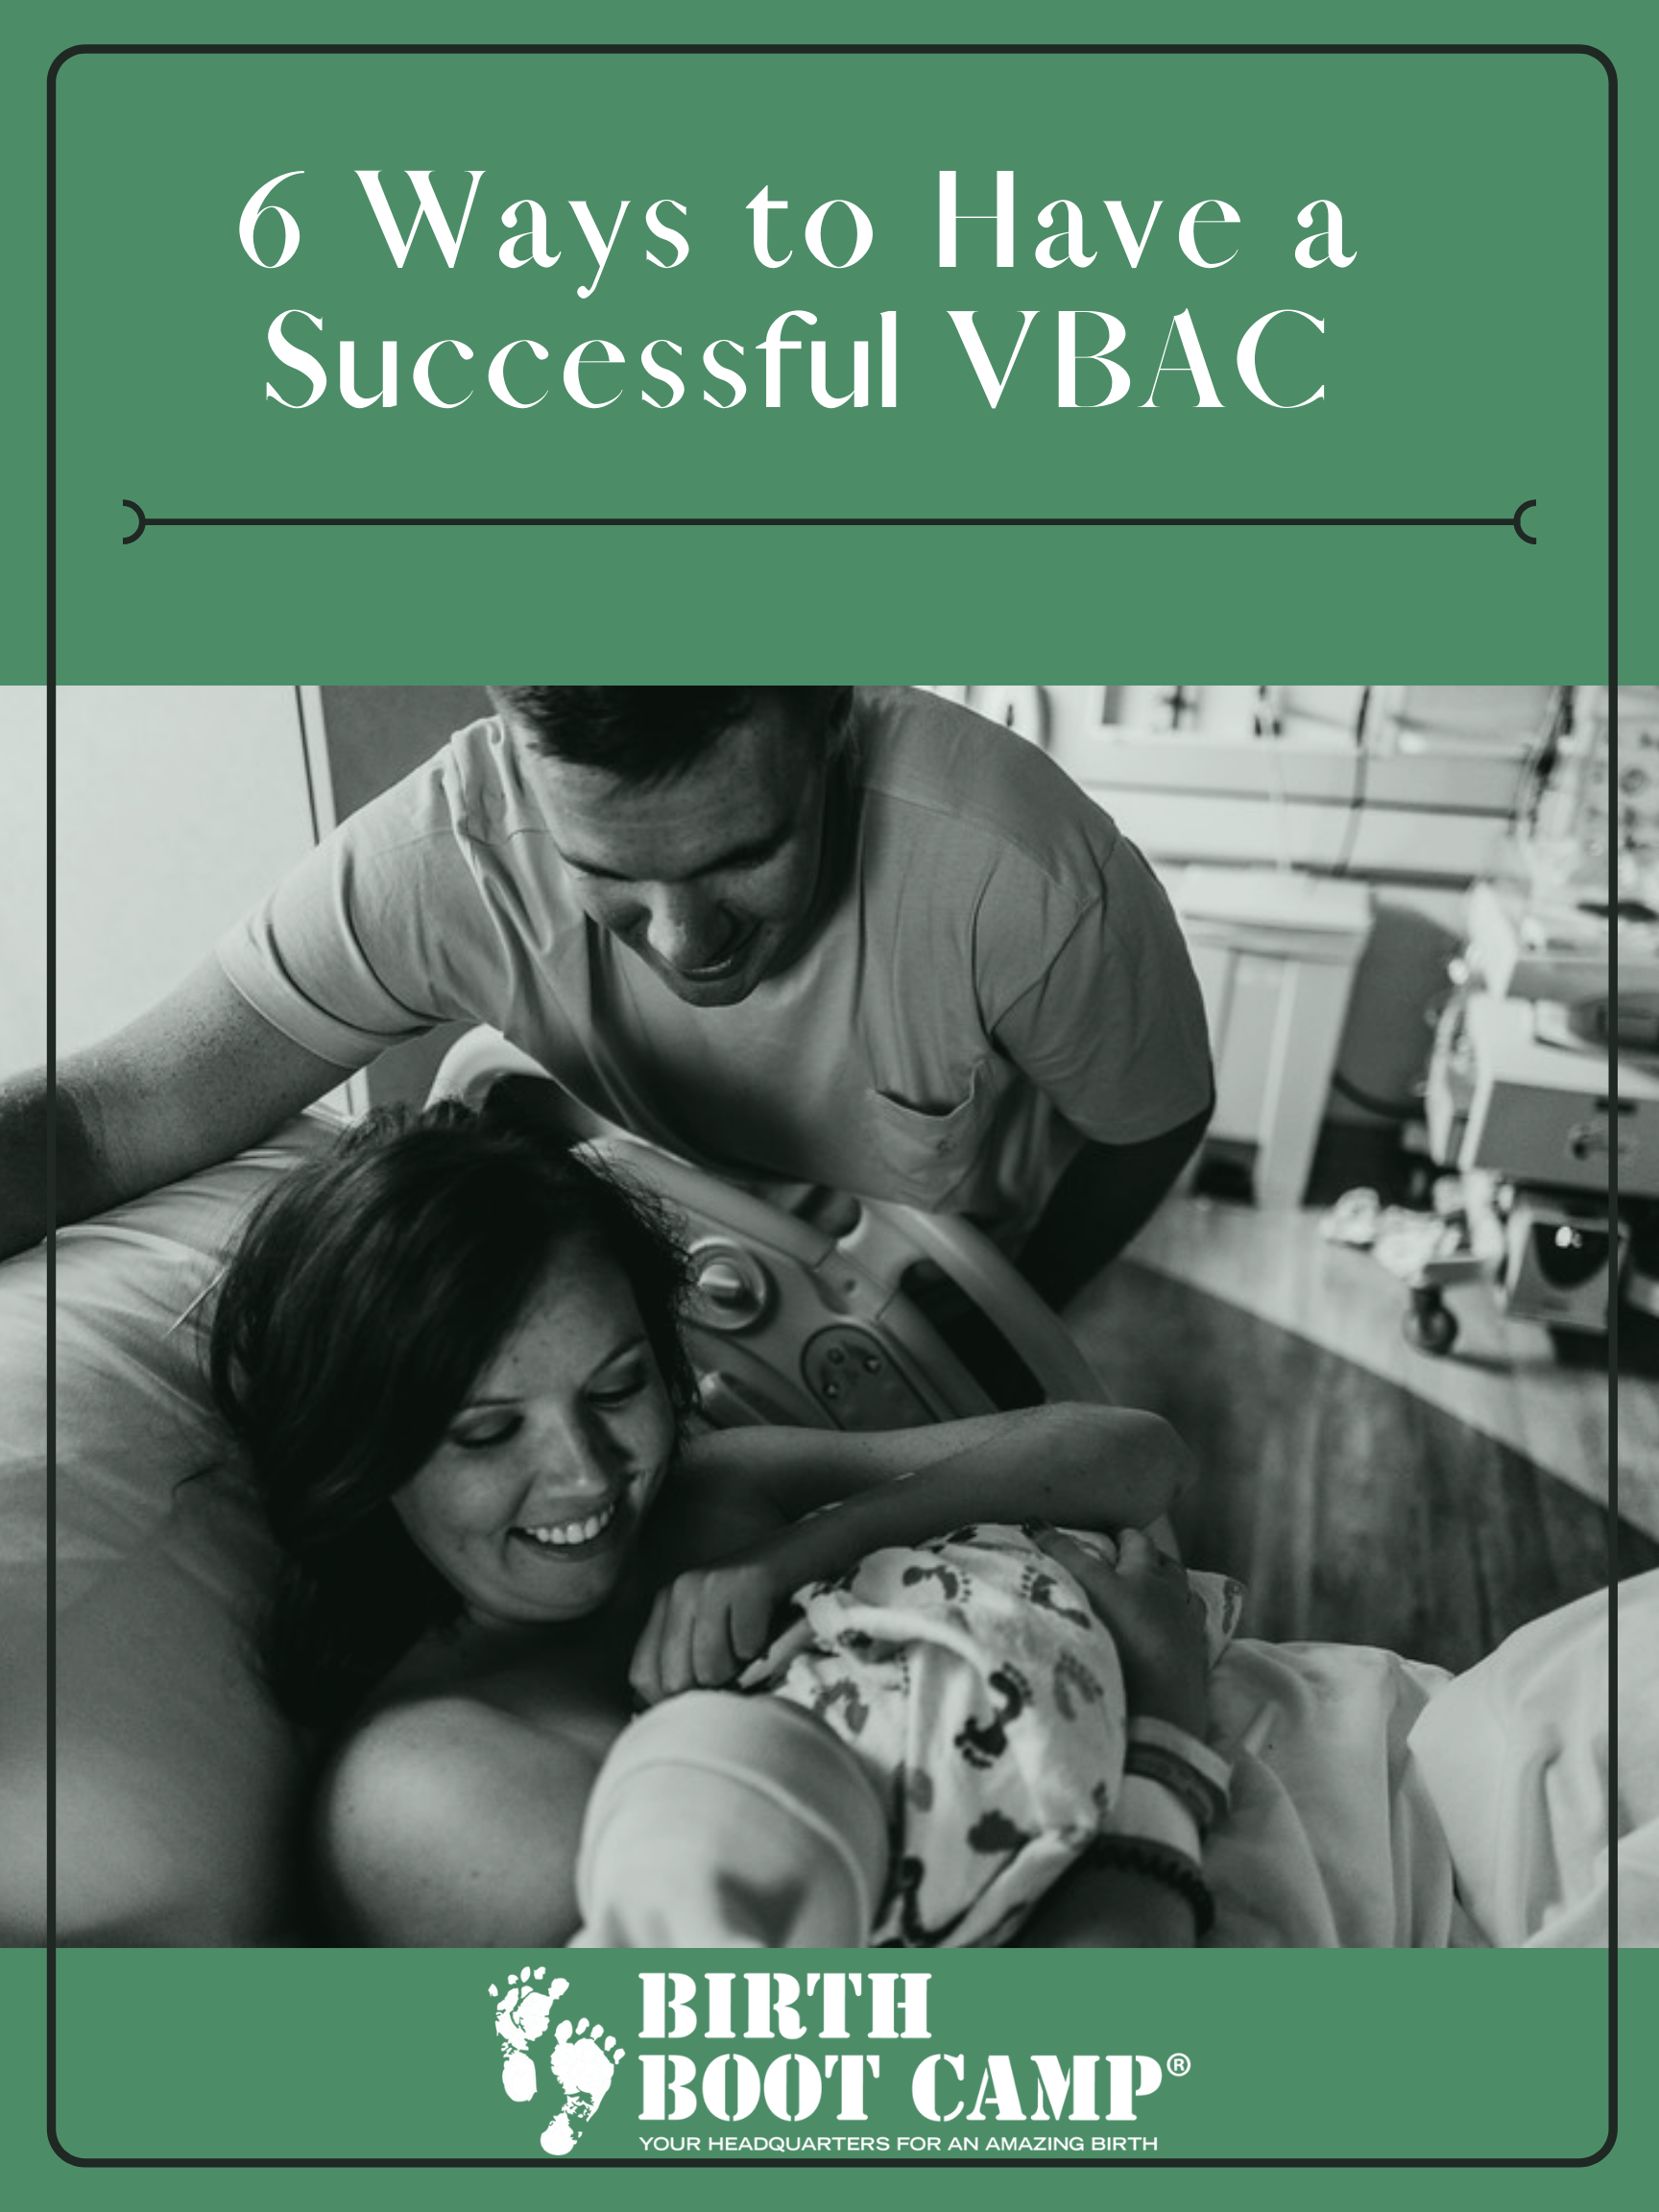 6 Ways to Have a Successful VBAC (Vaginal Birth After Cesarean)